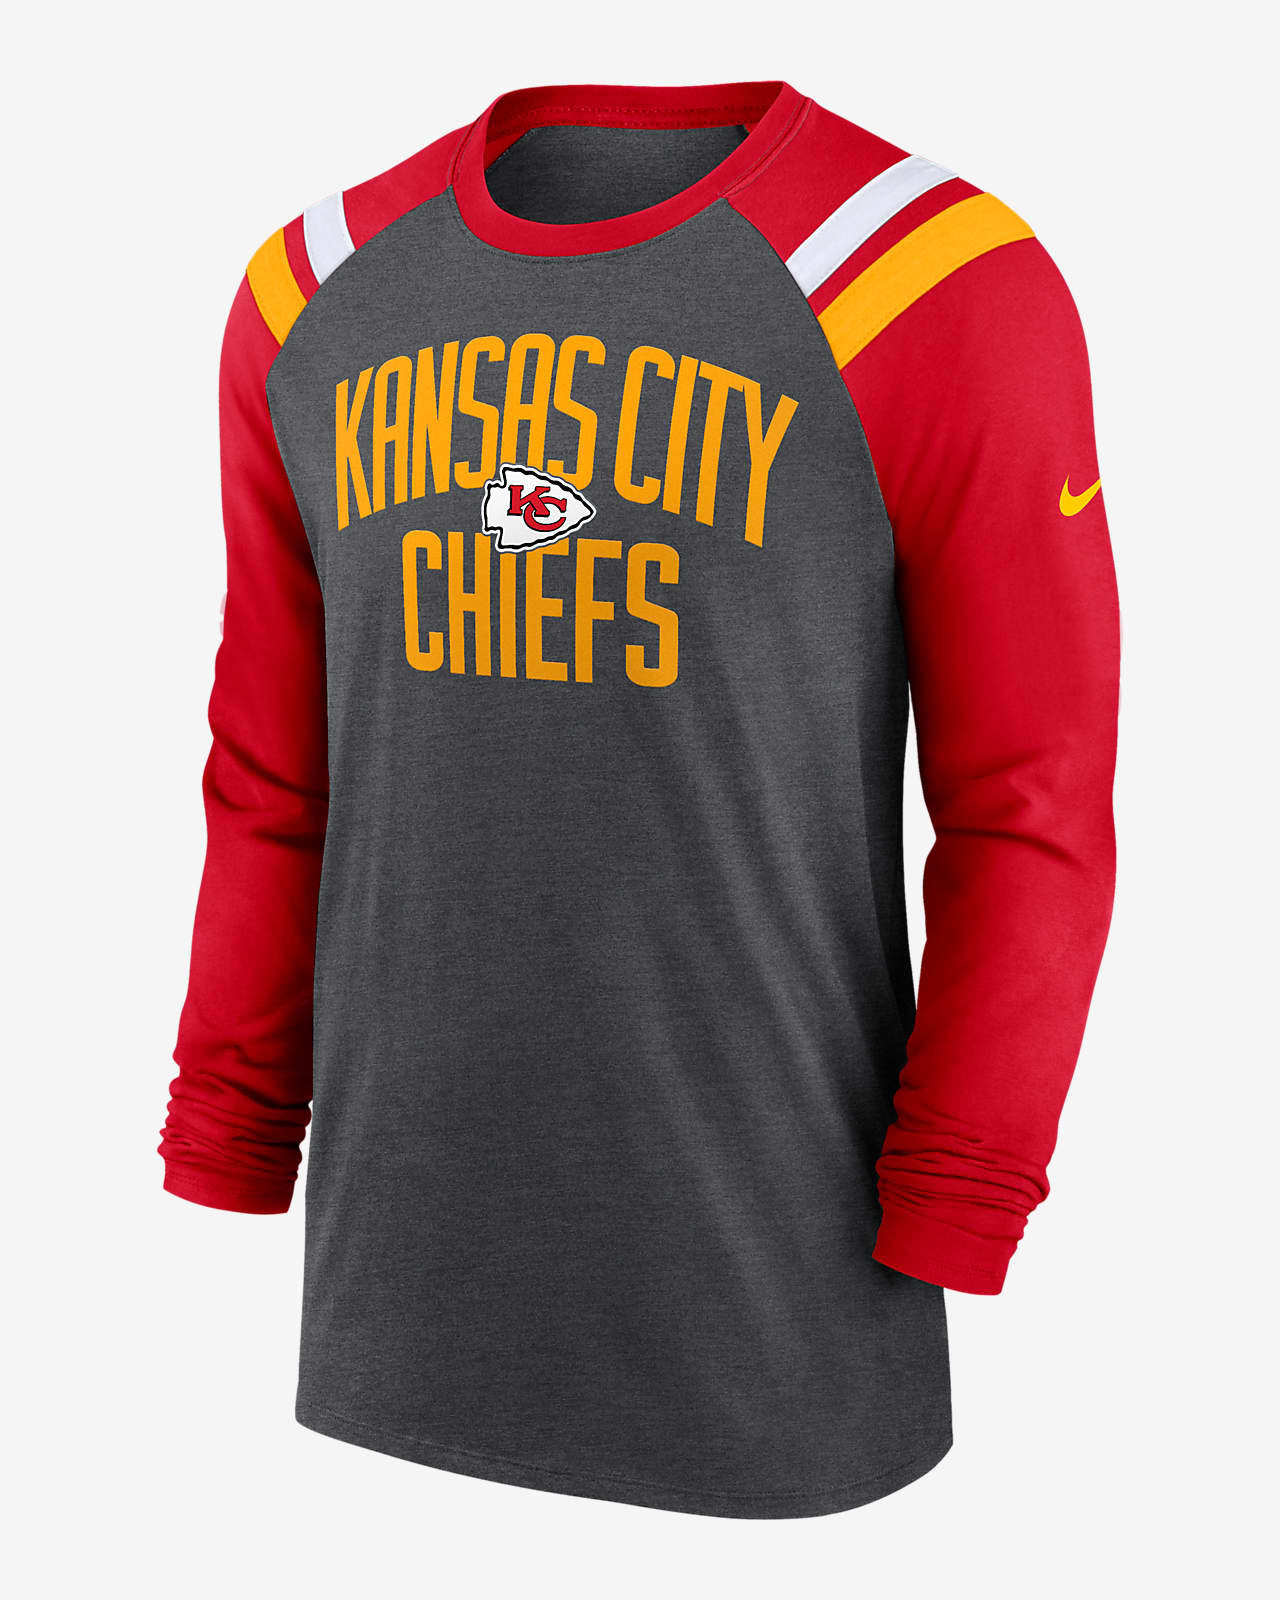 kc chiefs long sleeve shirts